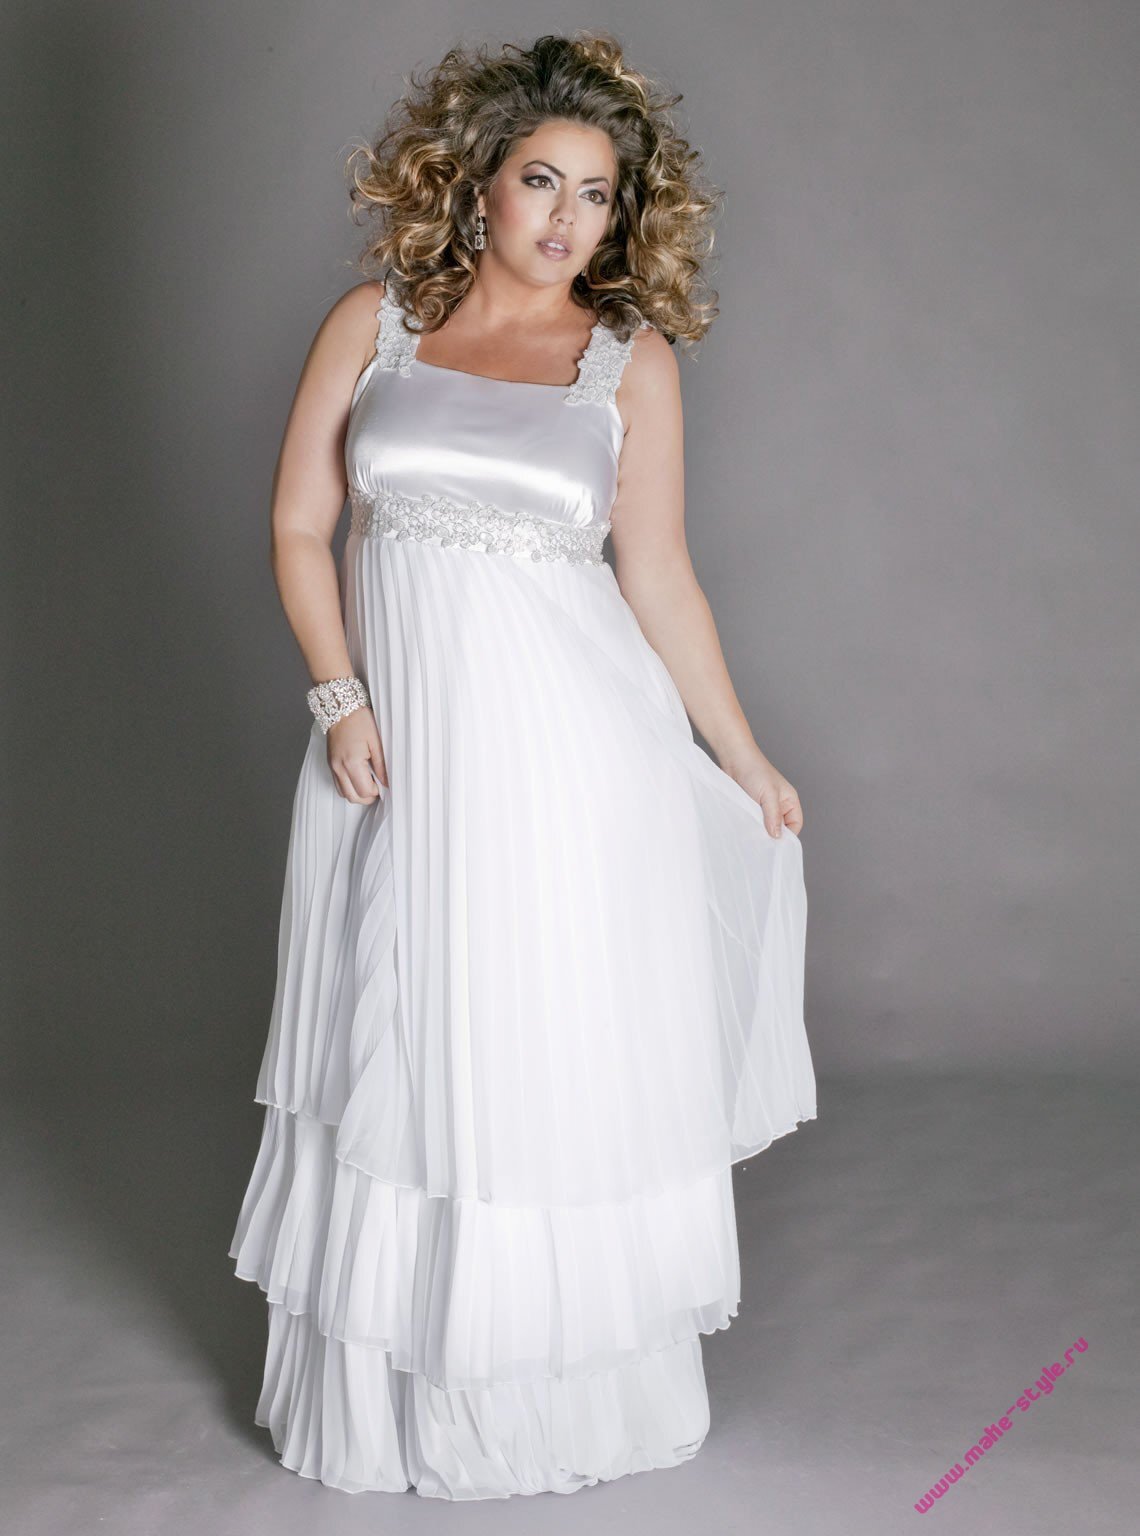 Wedding dresses for fat girls Photo - 1